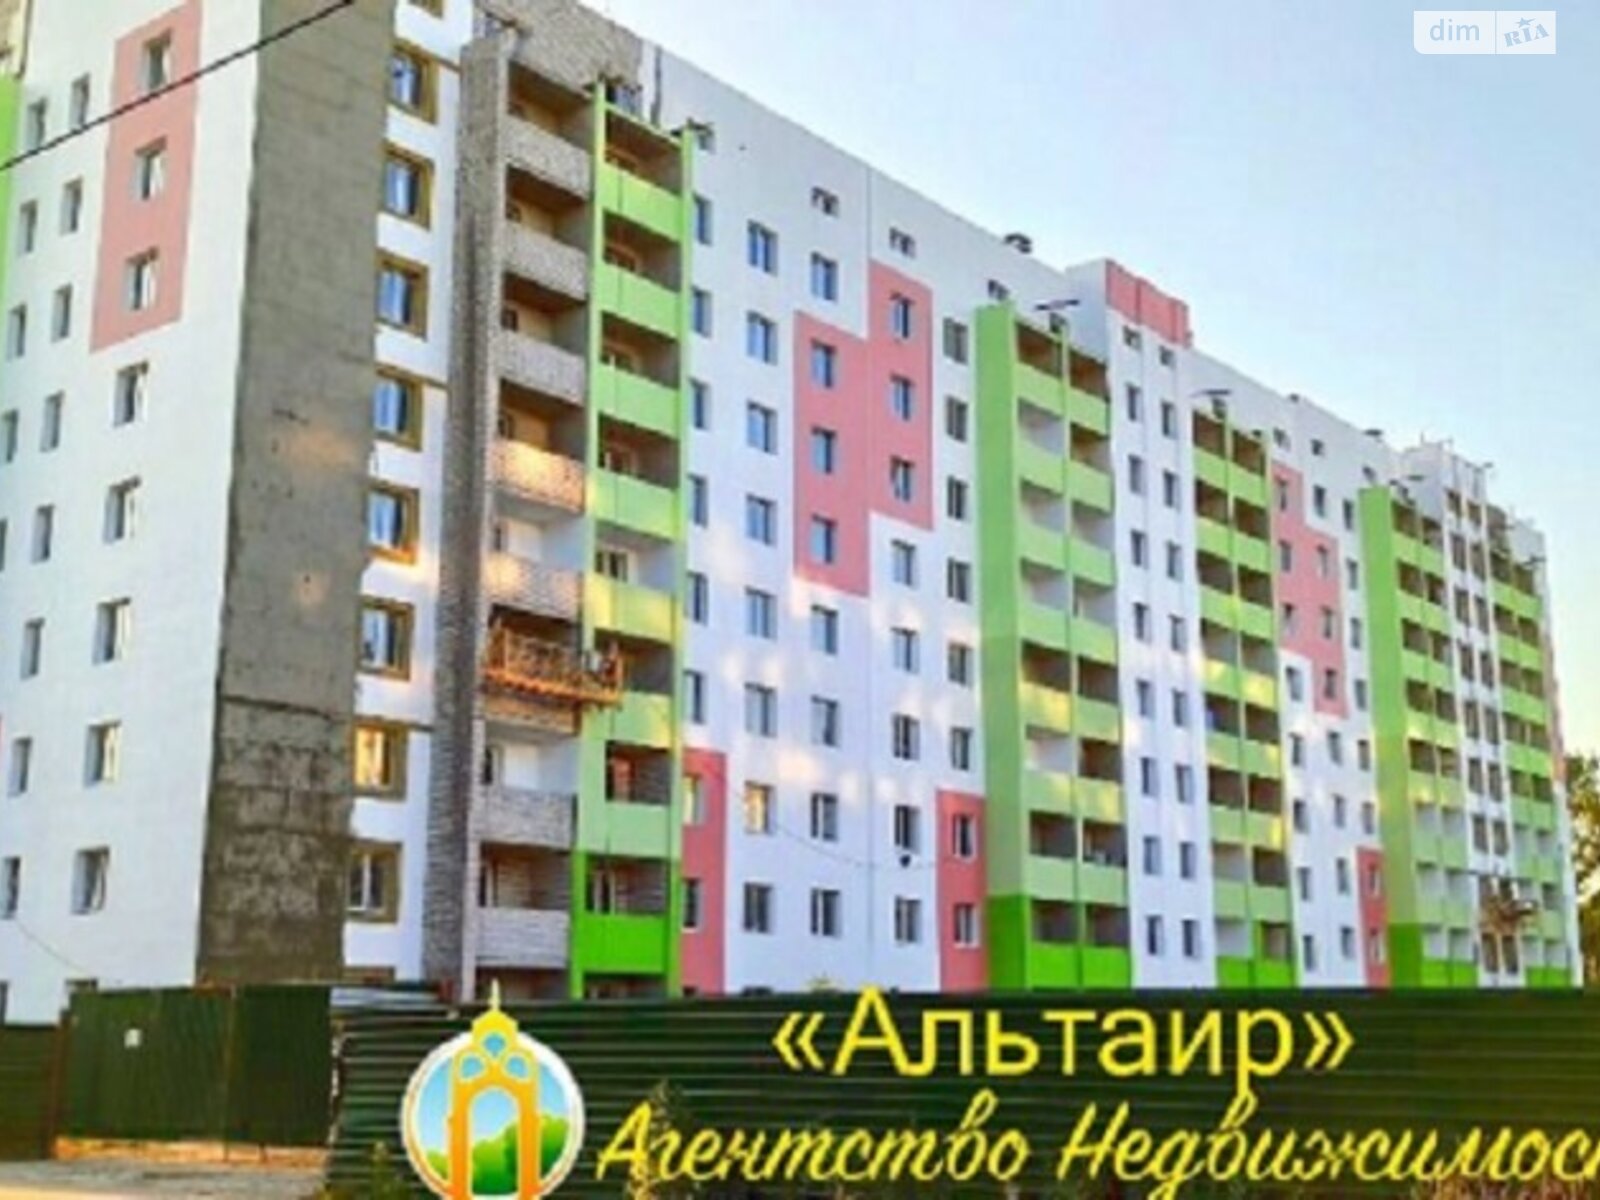 Продажа однокомнатной квартиры в Харькове, на ул. Мира, район ХТЗ фото 1